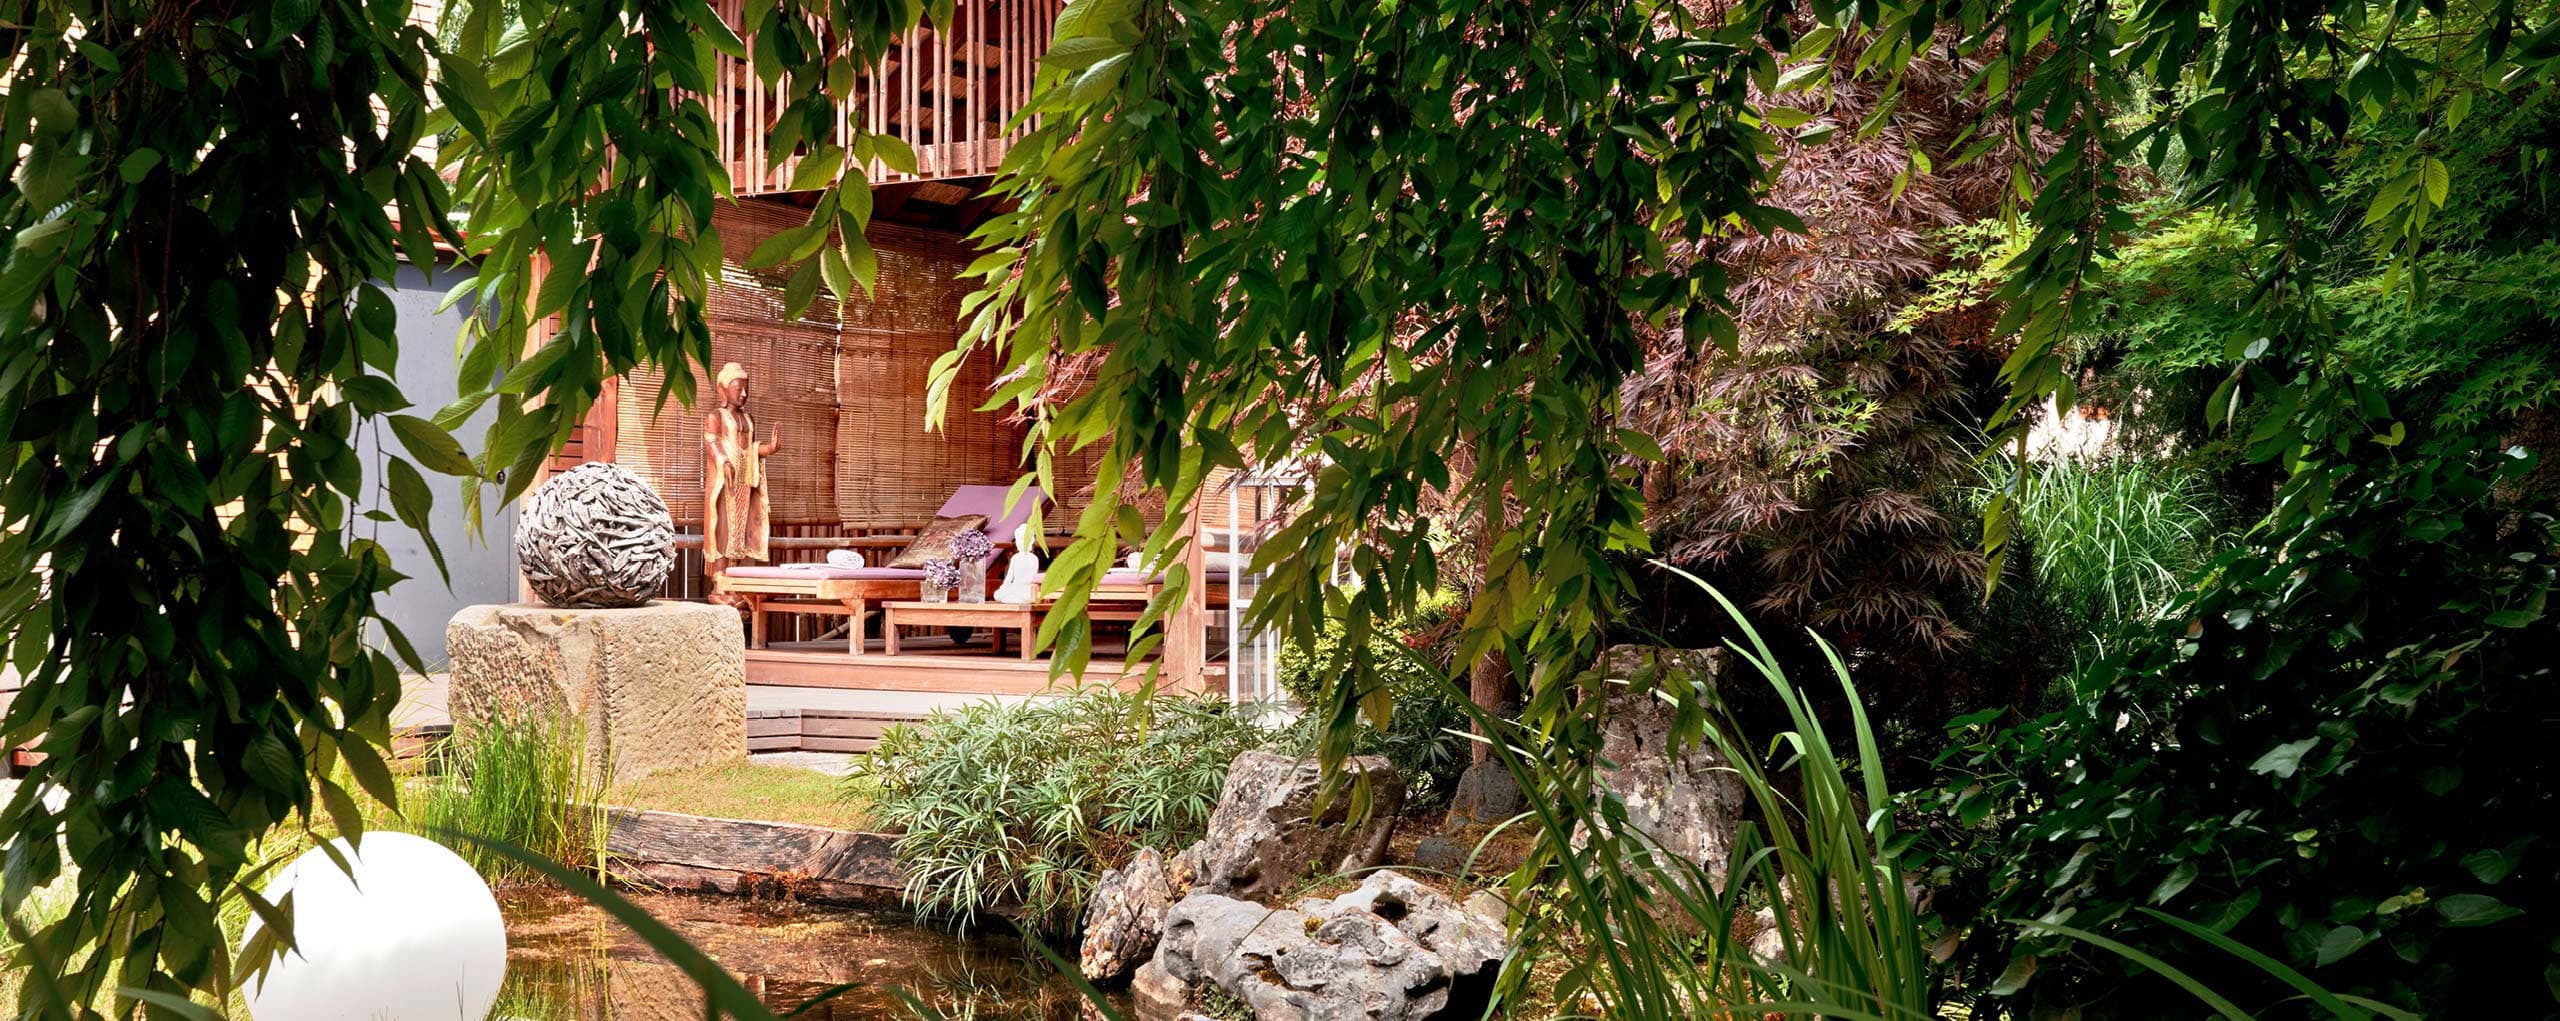 Ayurveda garden at the Ayurveda Resort Mandira